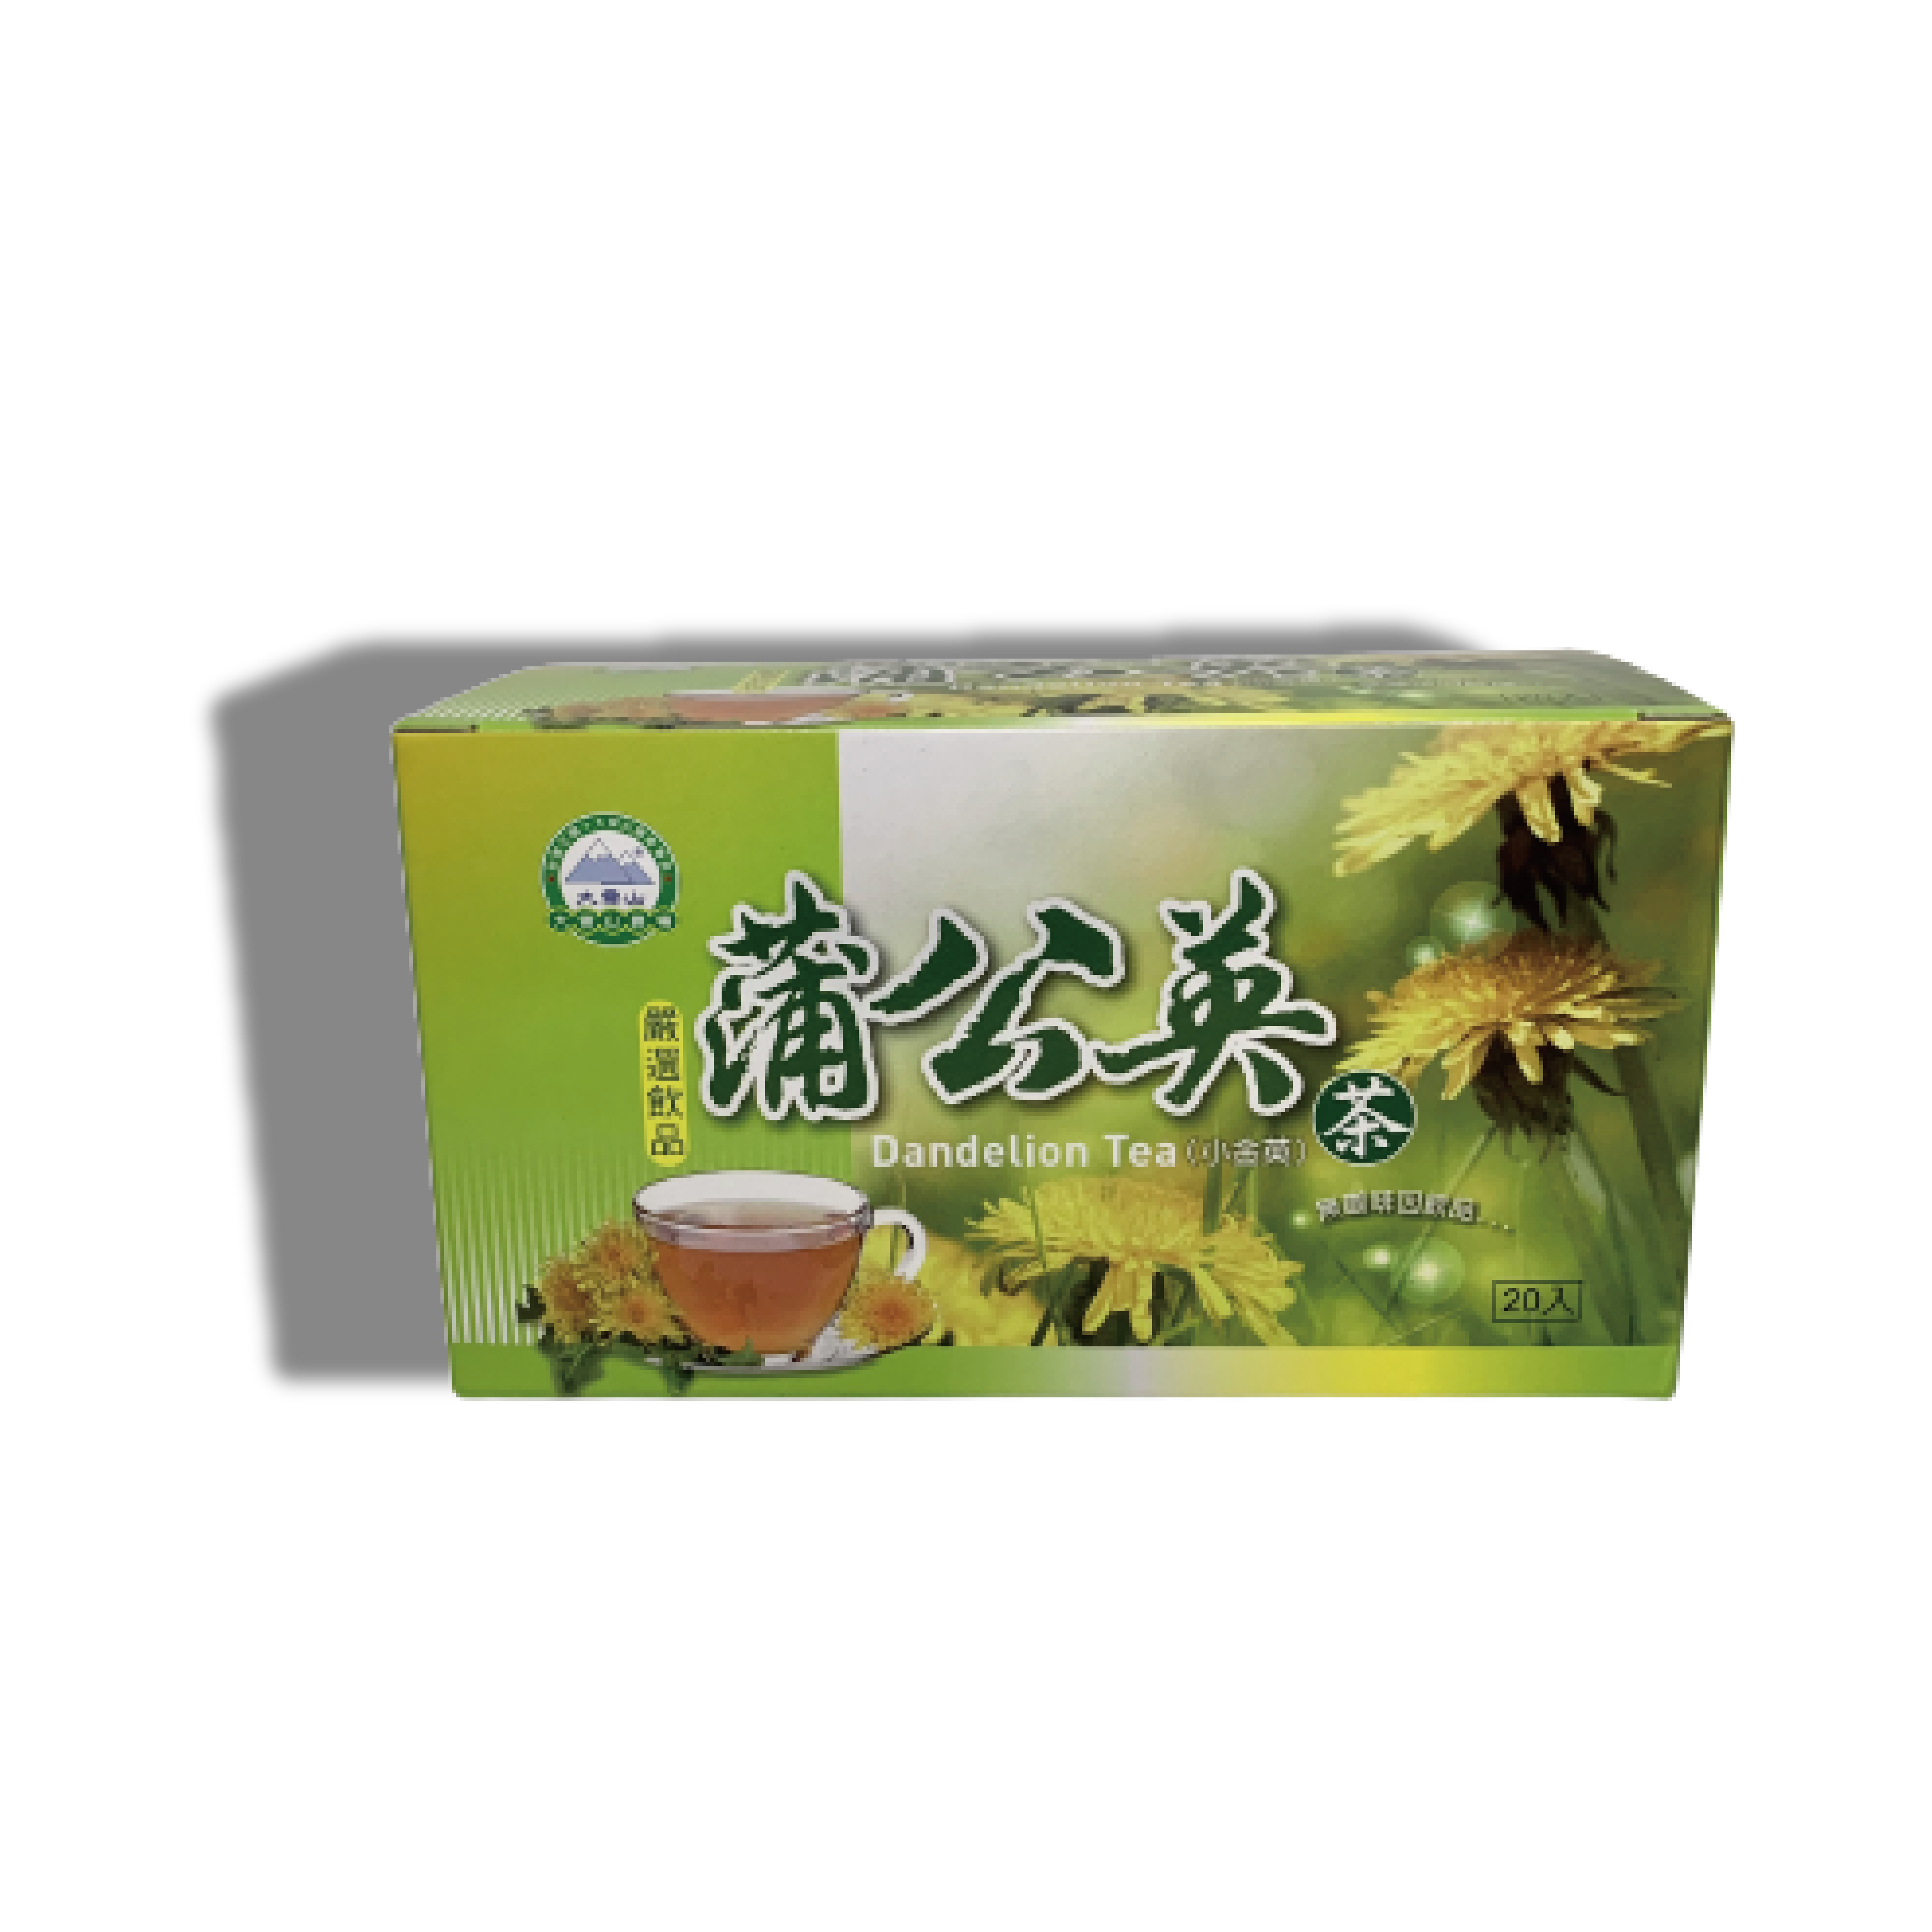 Dandelion Tea (Large)